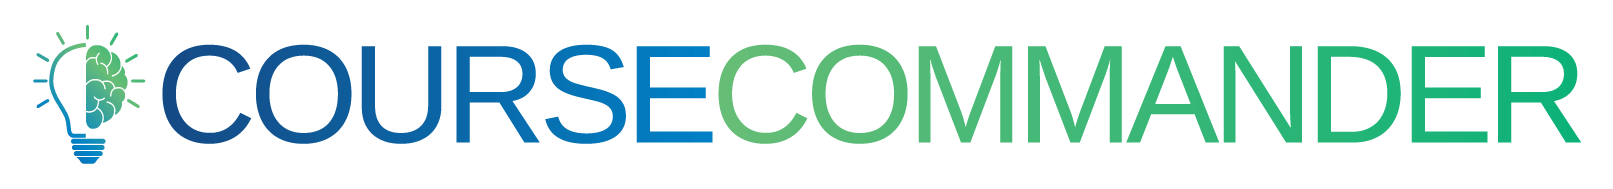 CourseCommander Logo